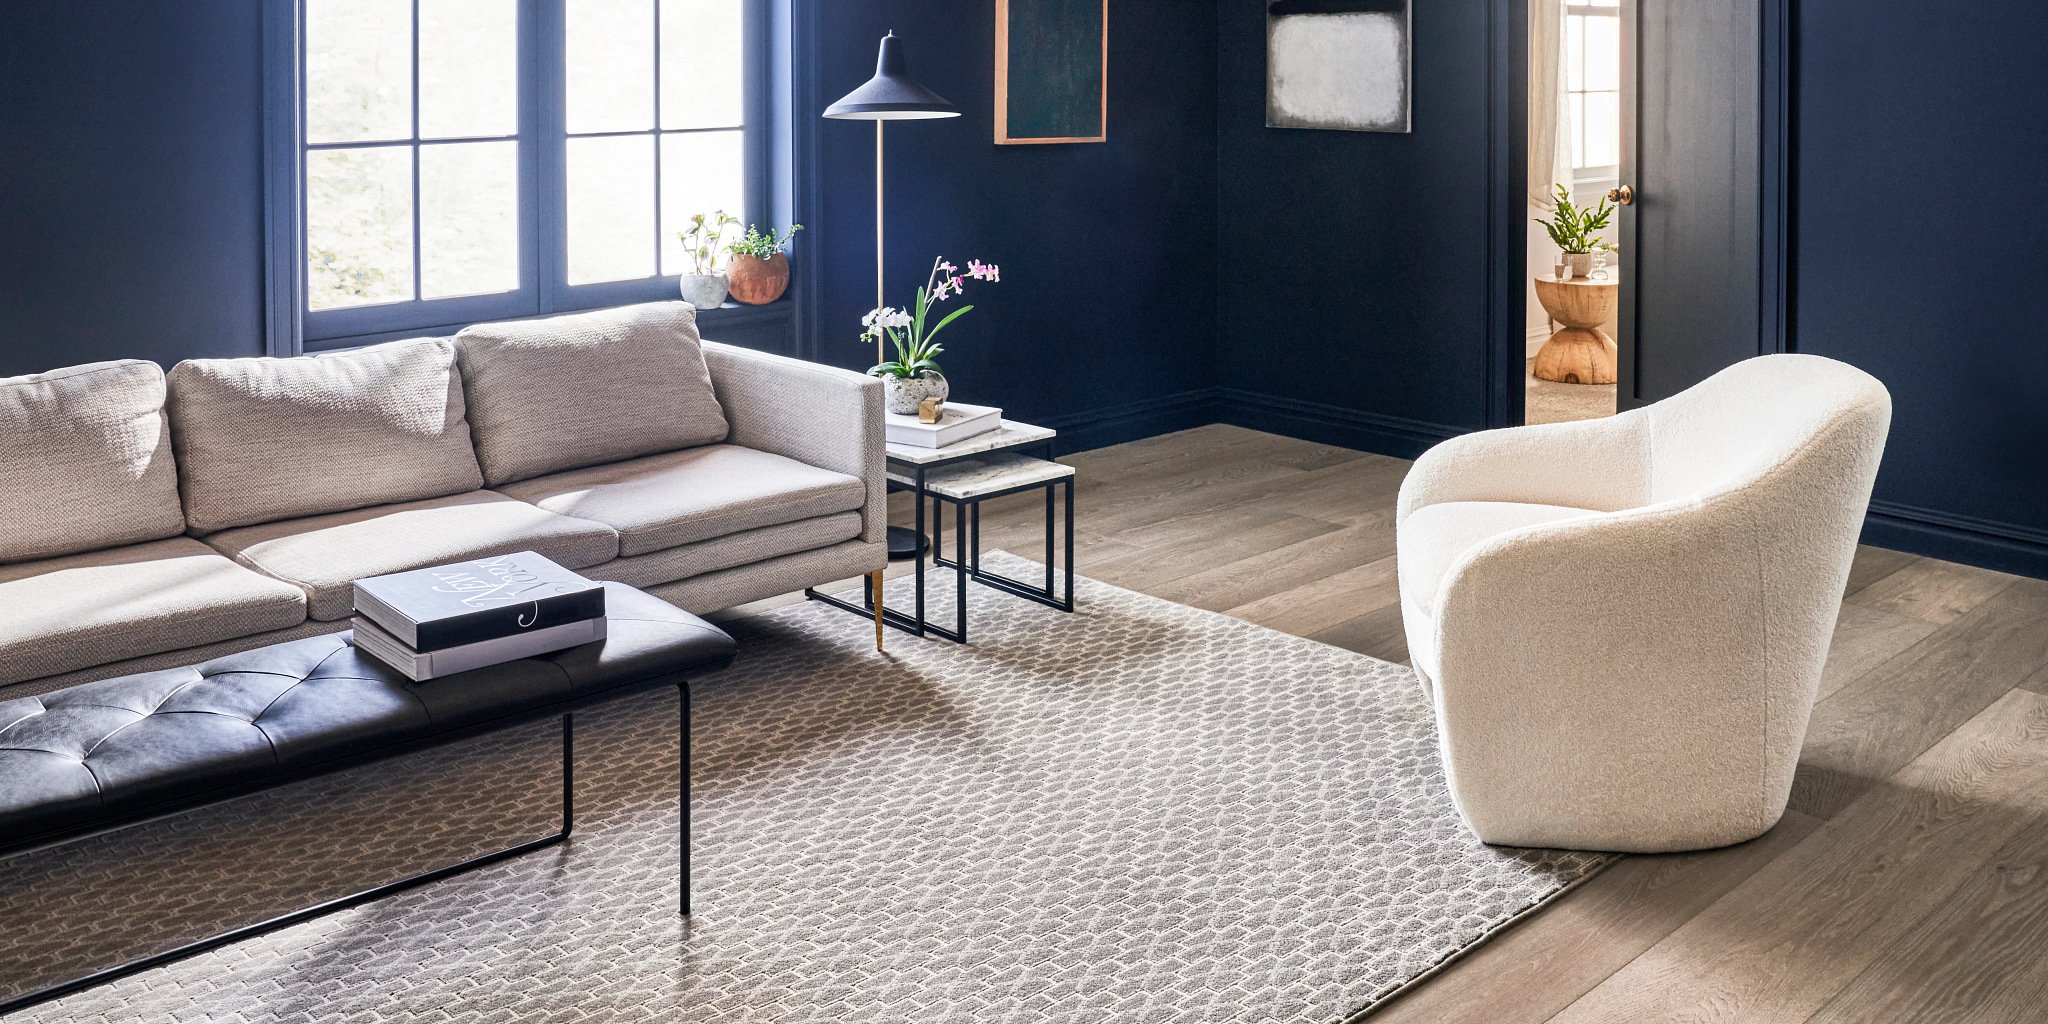 light grey rug in living room with dark blue walls